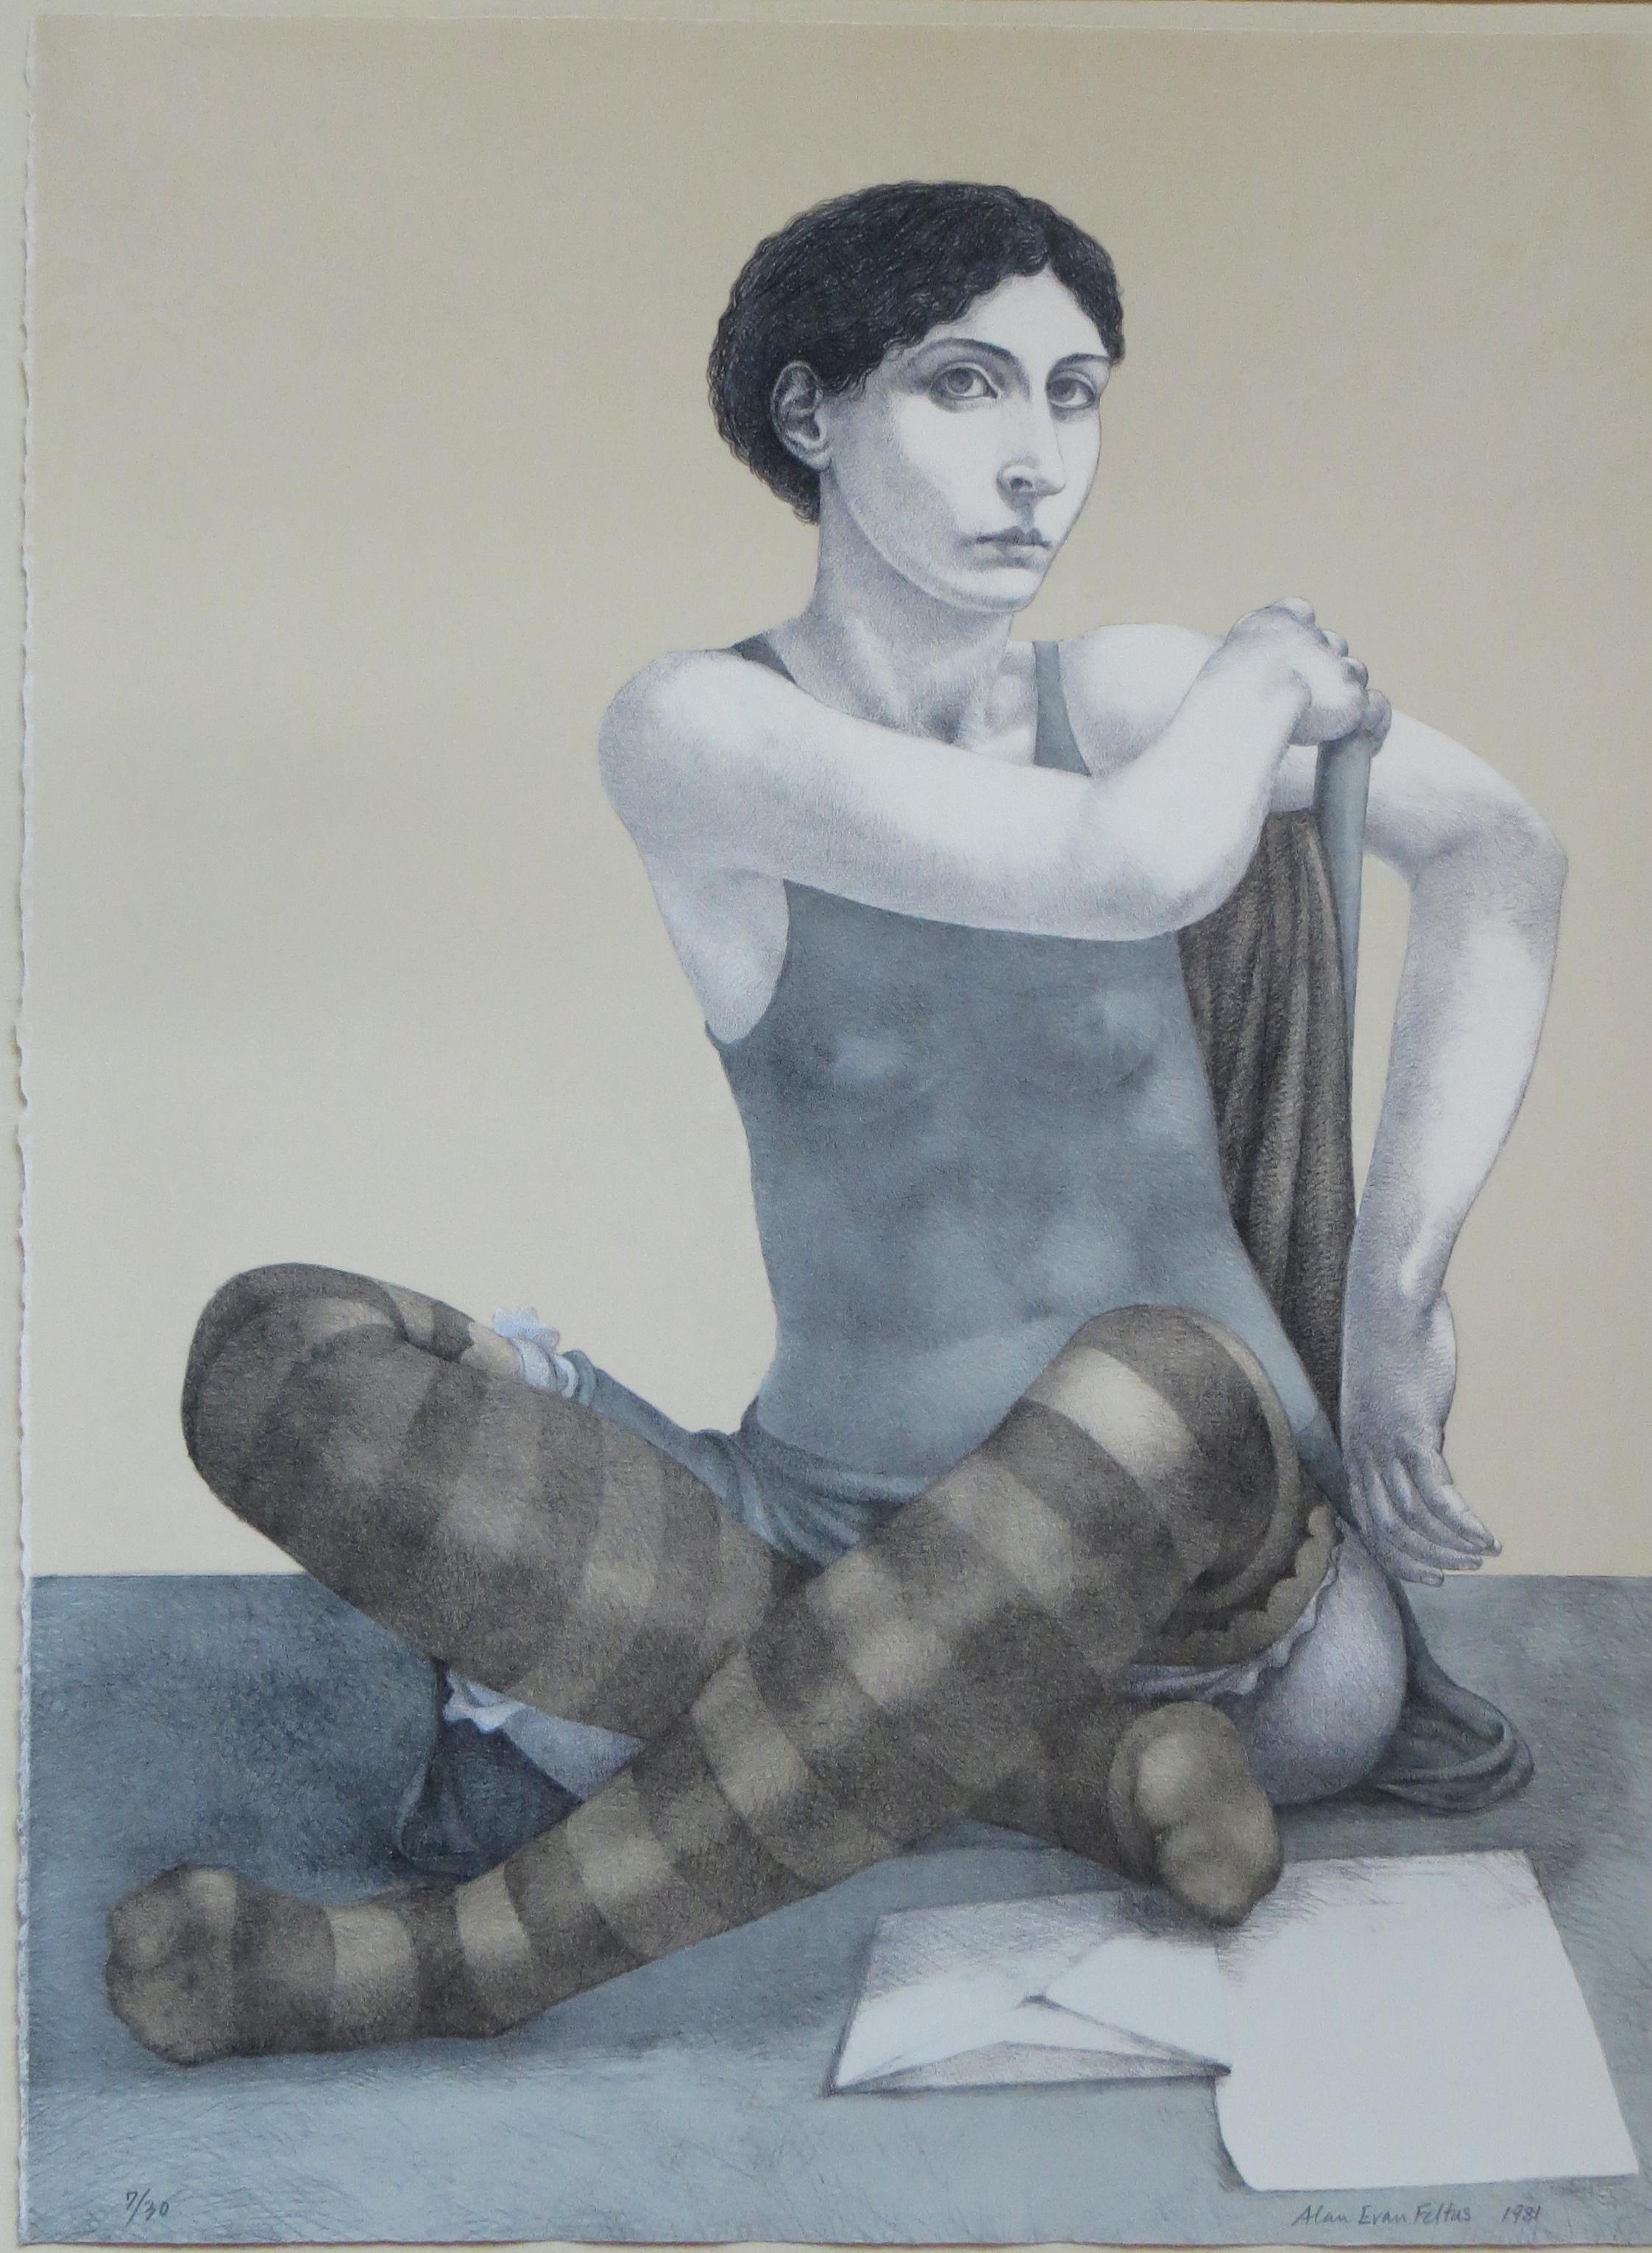 Dancer at Rest - American Realist Print by Alan Feltus